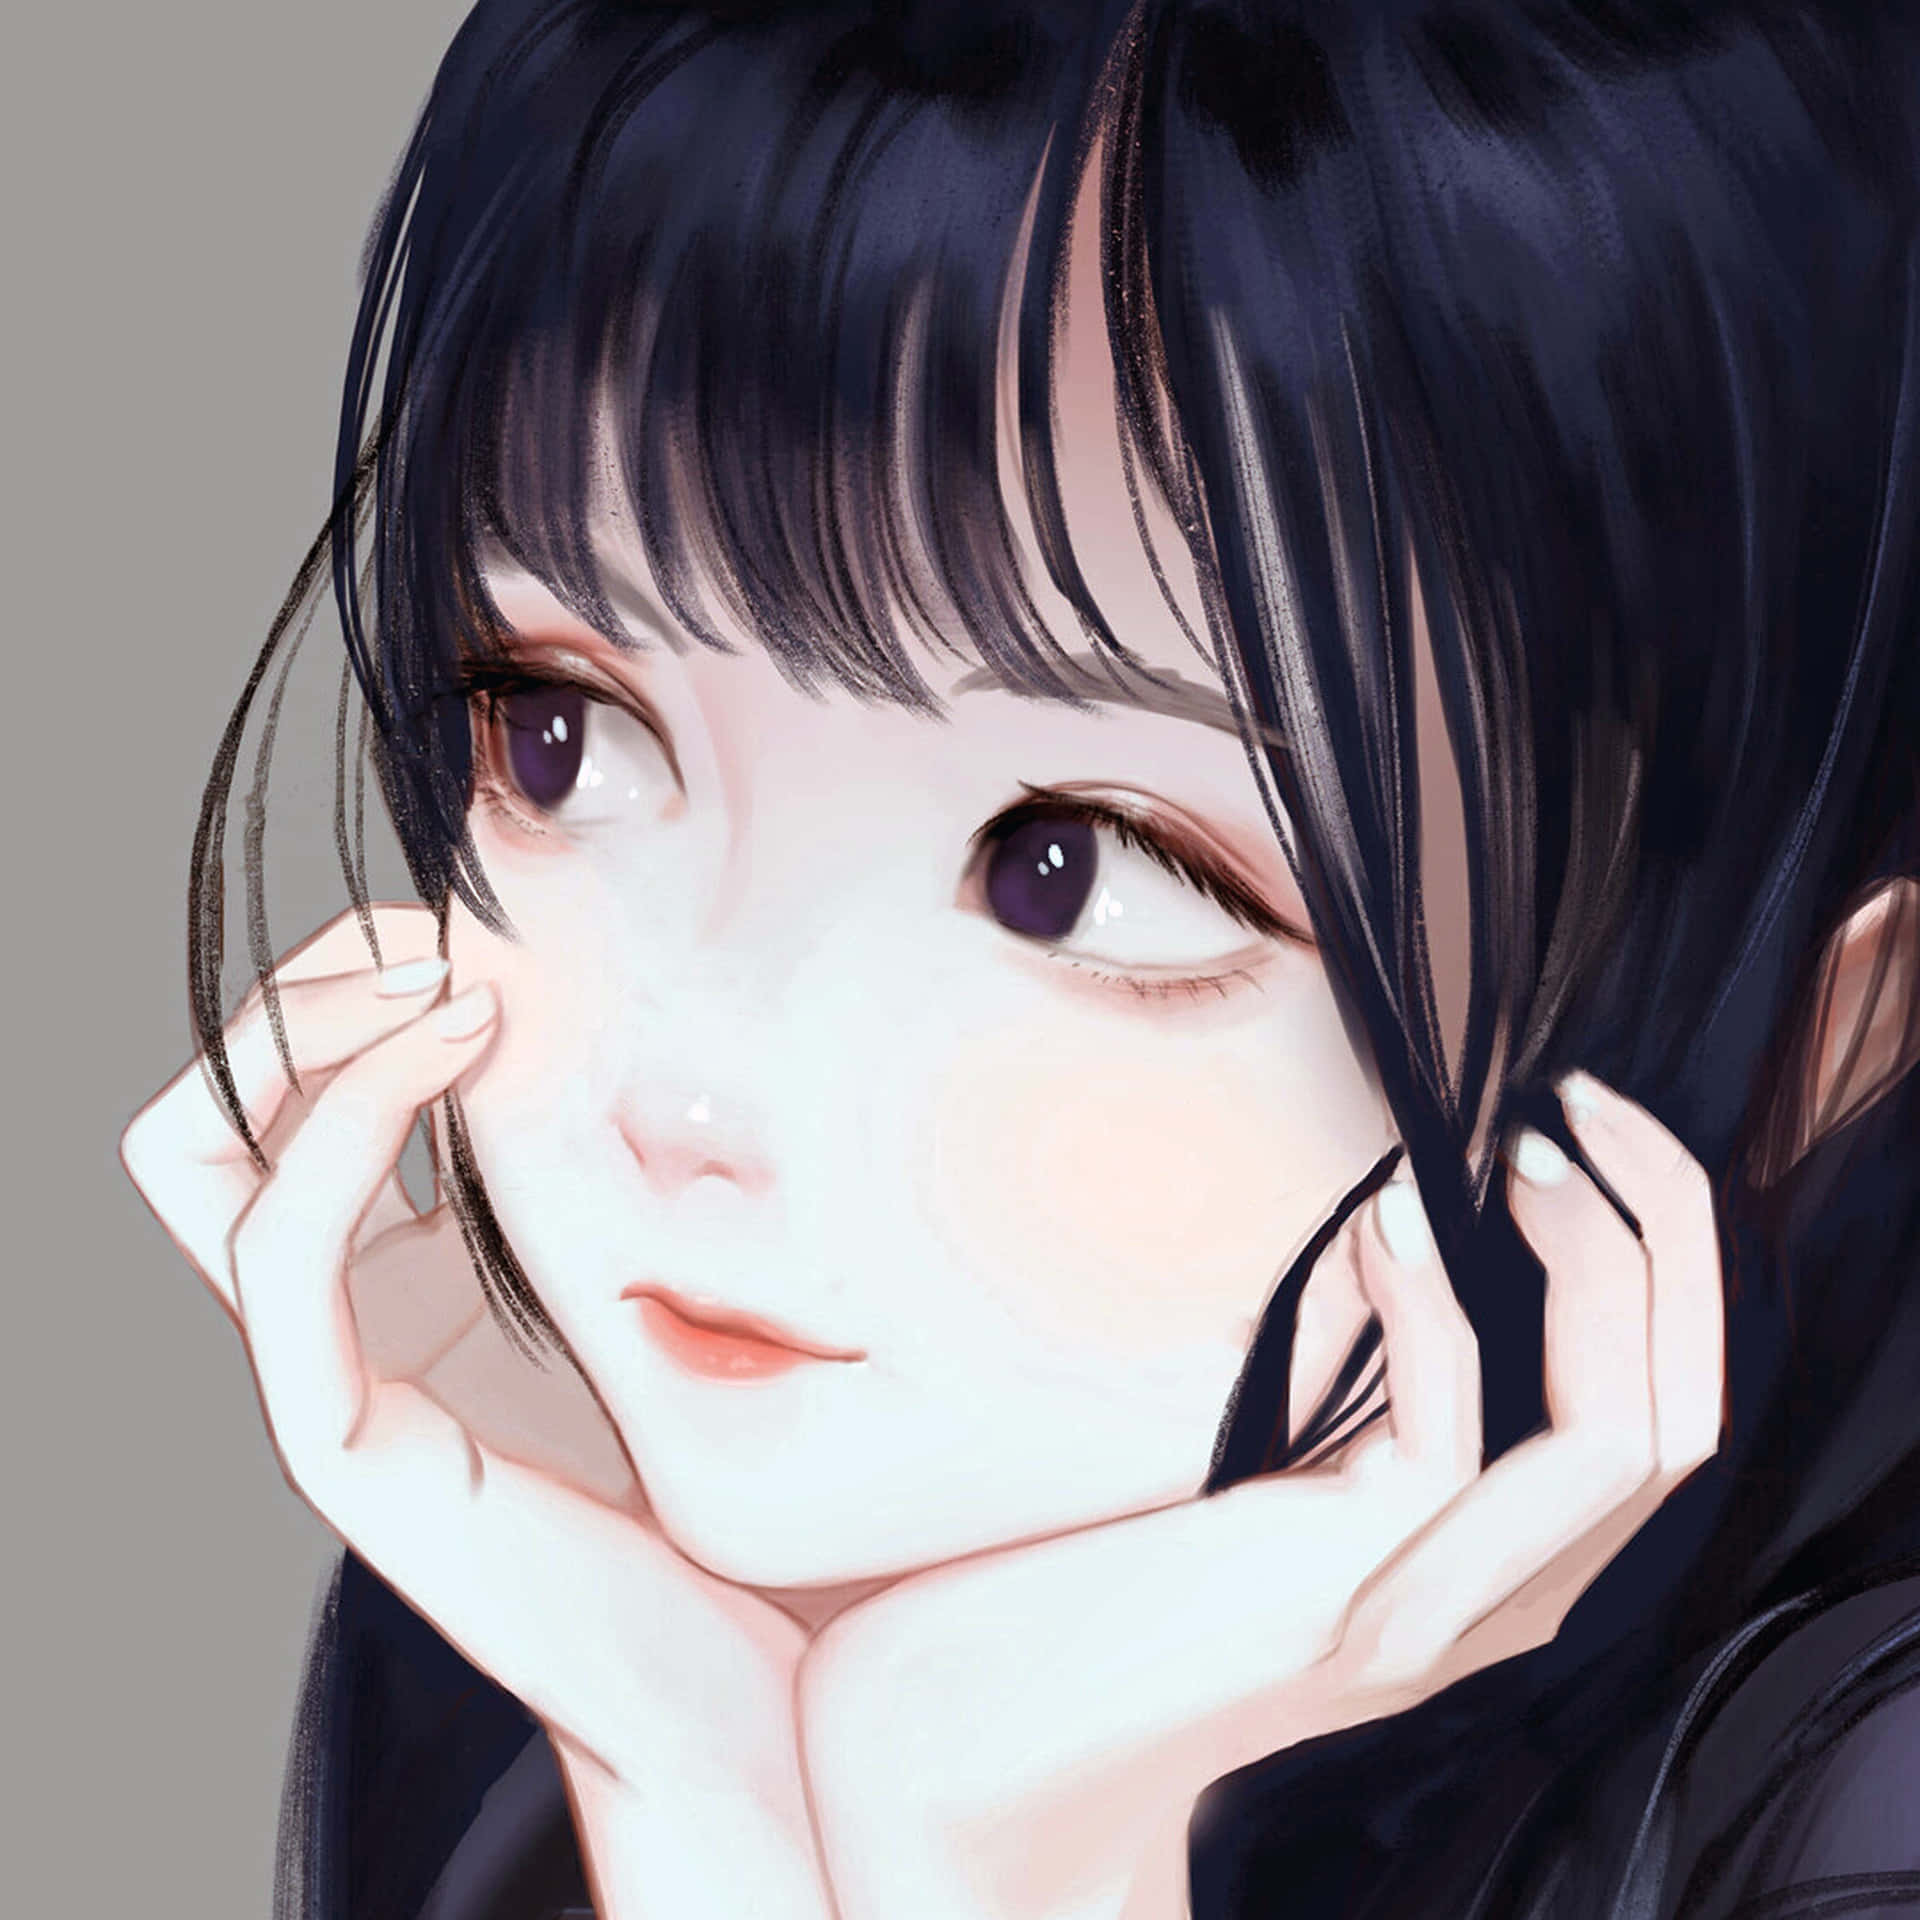 A young anime schoolgirl taking a break